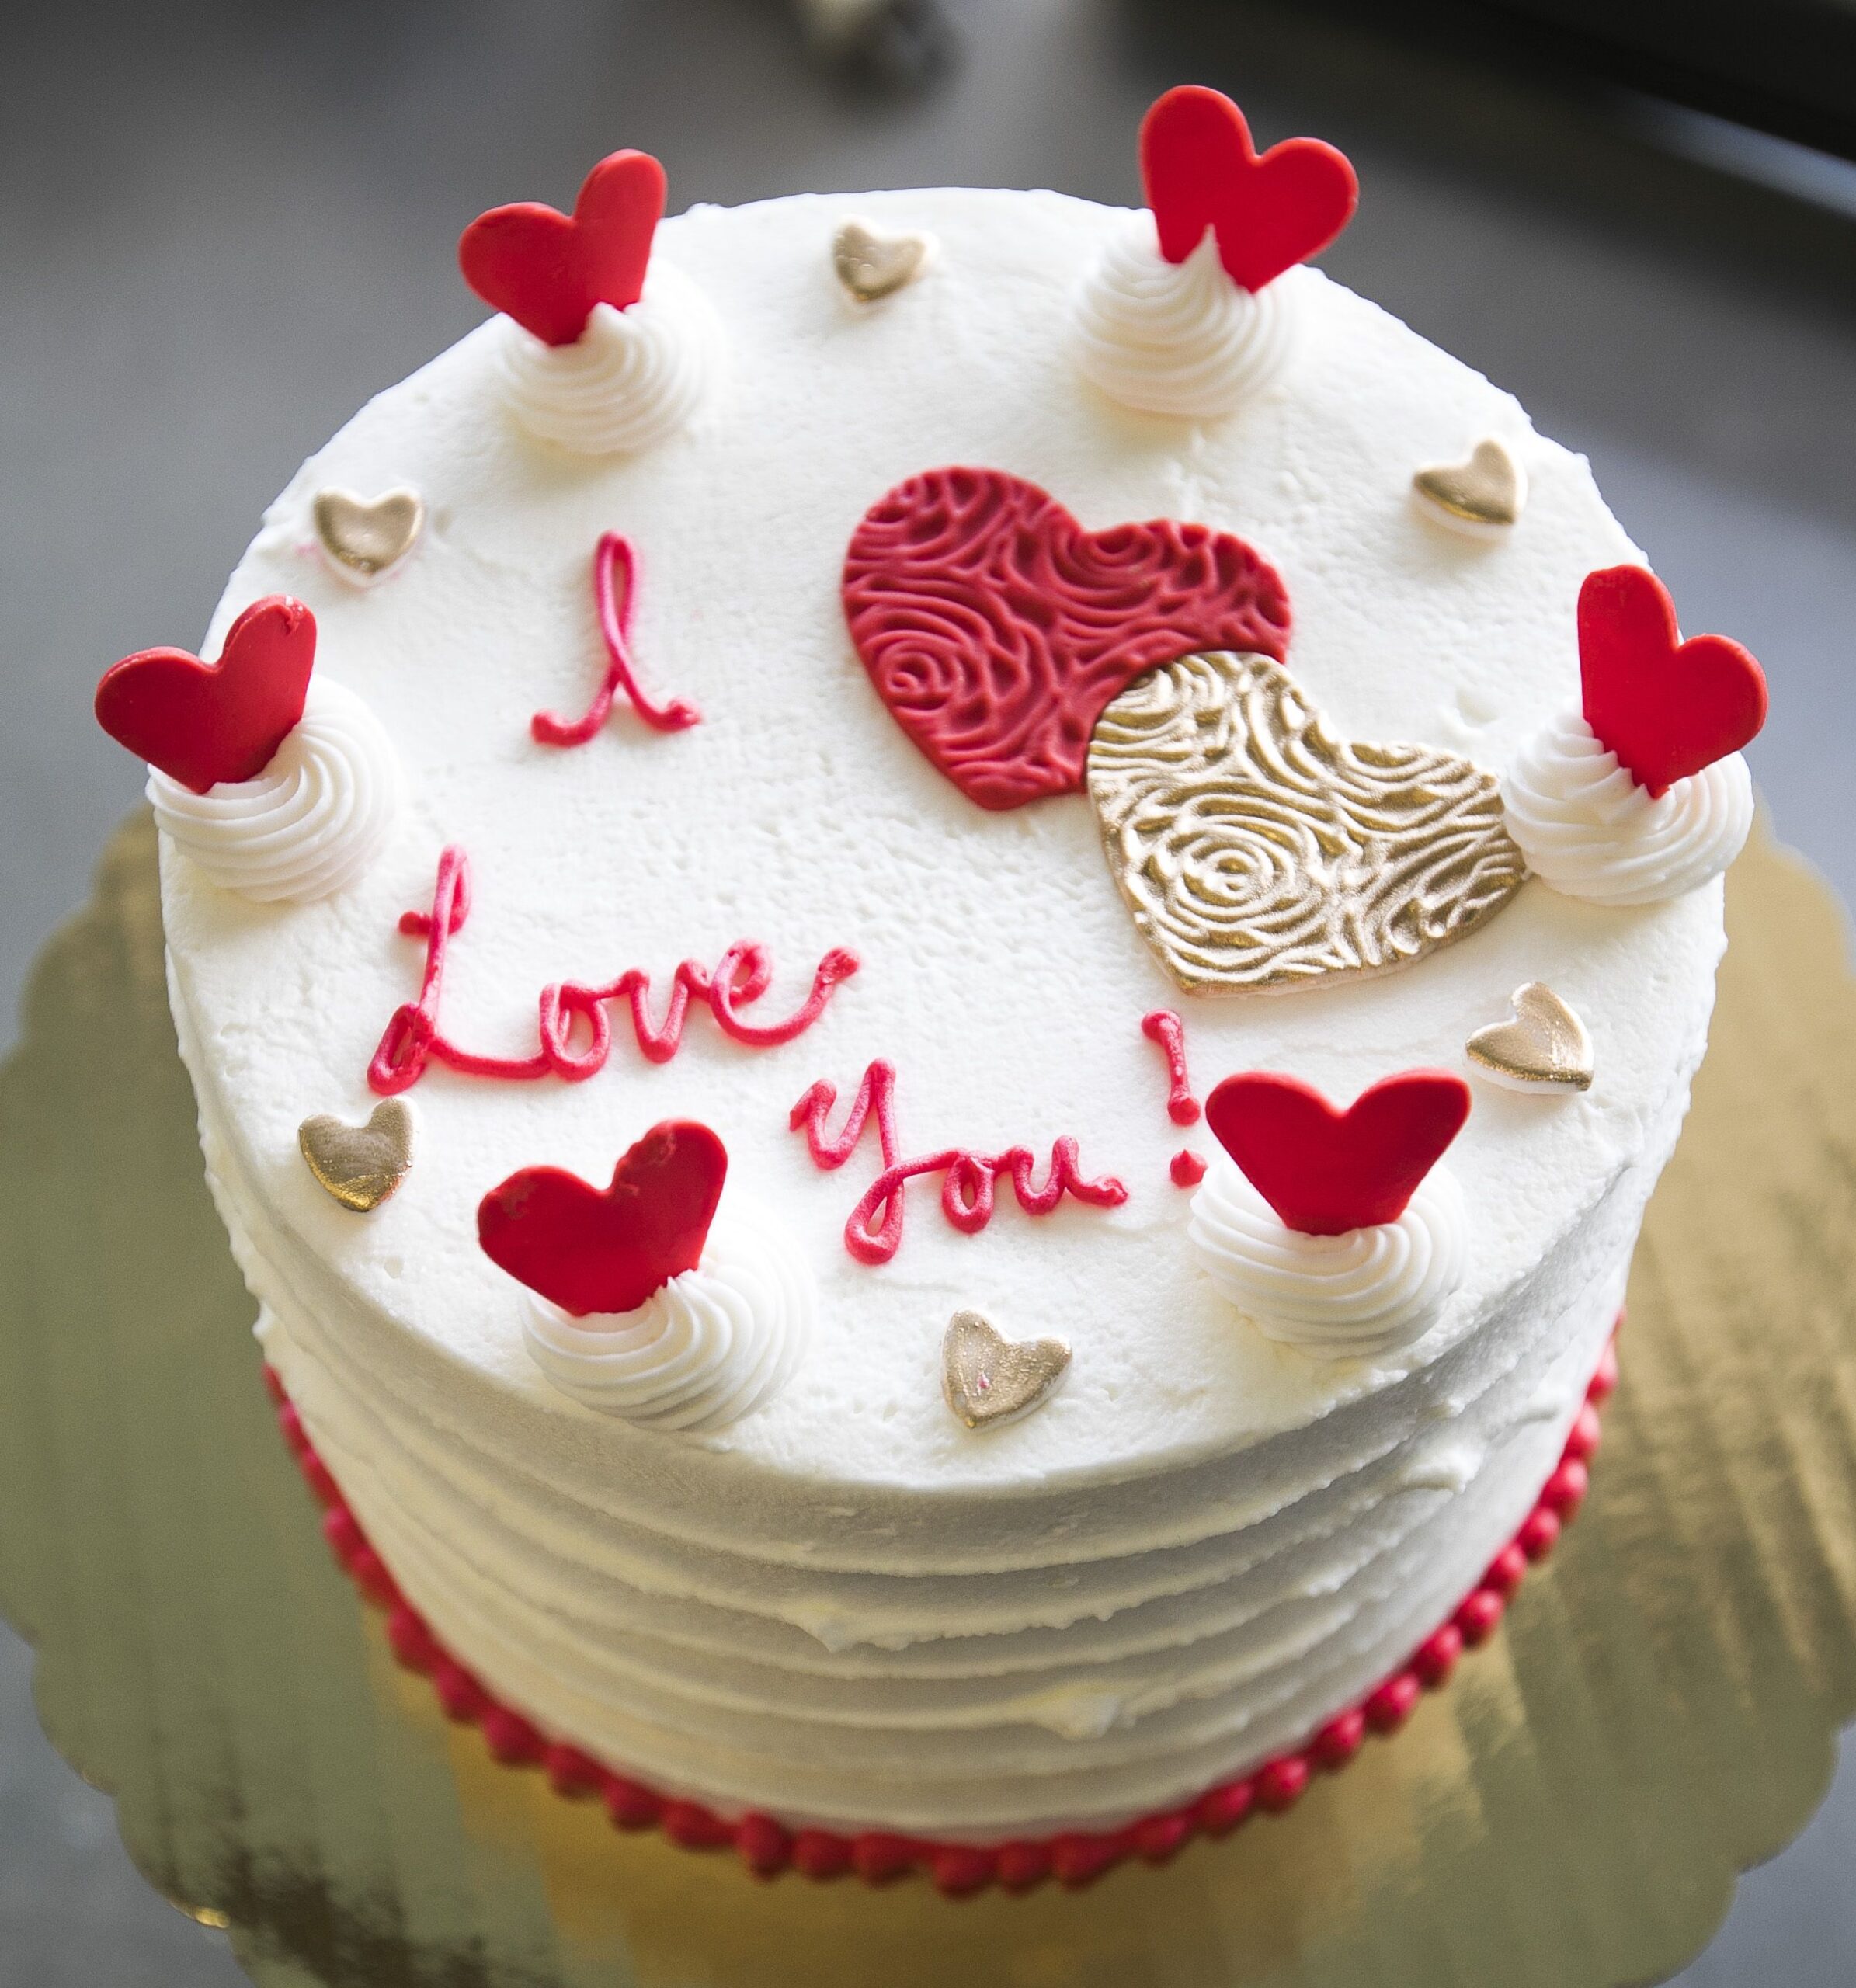 Valentine Cake House Kiambu Limited - It's Friday, Cakes cakes cakes all  time🍰🍰🍰🍰 Energize yourself and everybody else around you. Call 🤙 us on  0703149471 or 0703149476 #cakemood #Freshcakes #yummycakes  #servingyouhappines . | Facebook